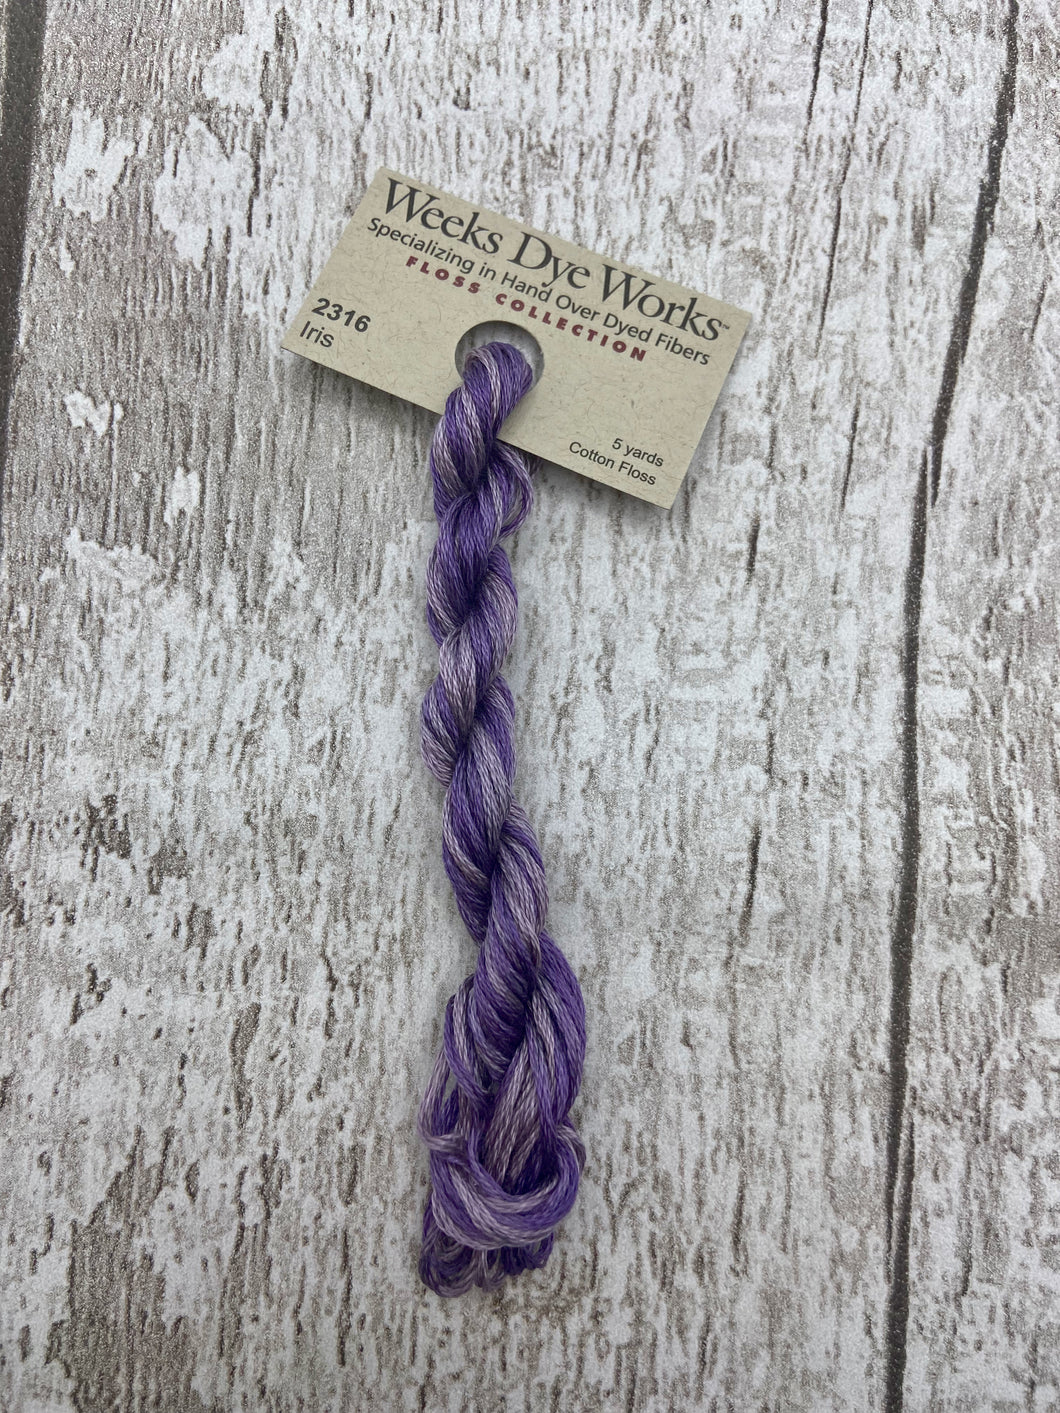 Iris (#2316) Weeks Dye Works, 6-strand cotton floss